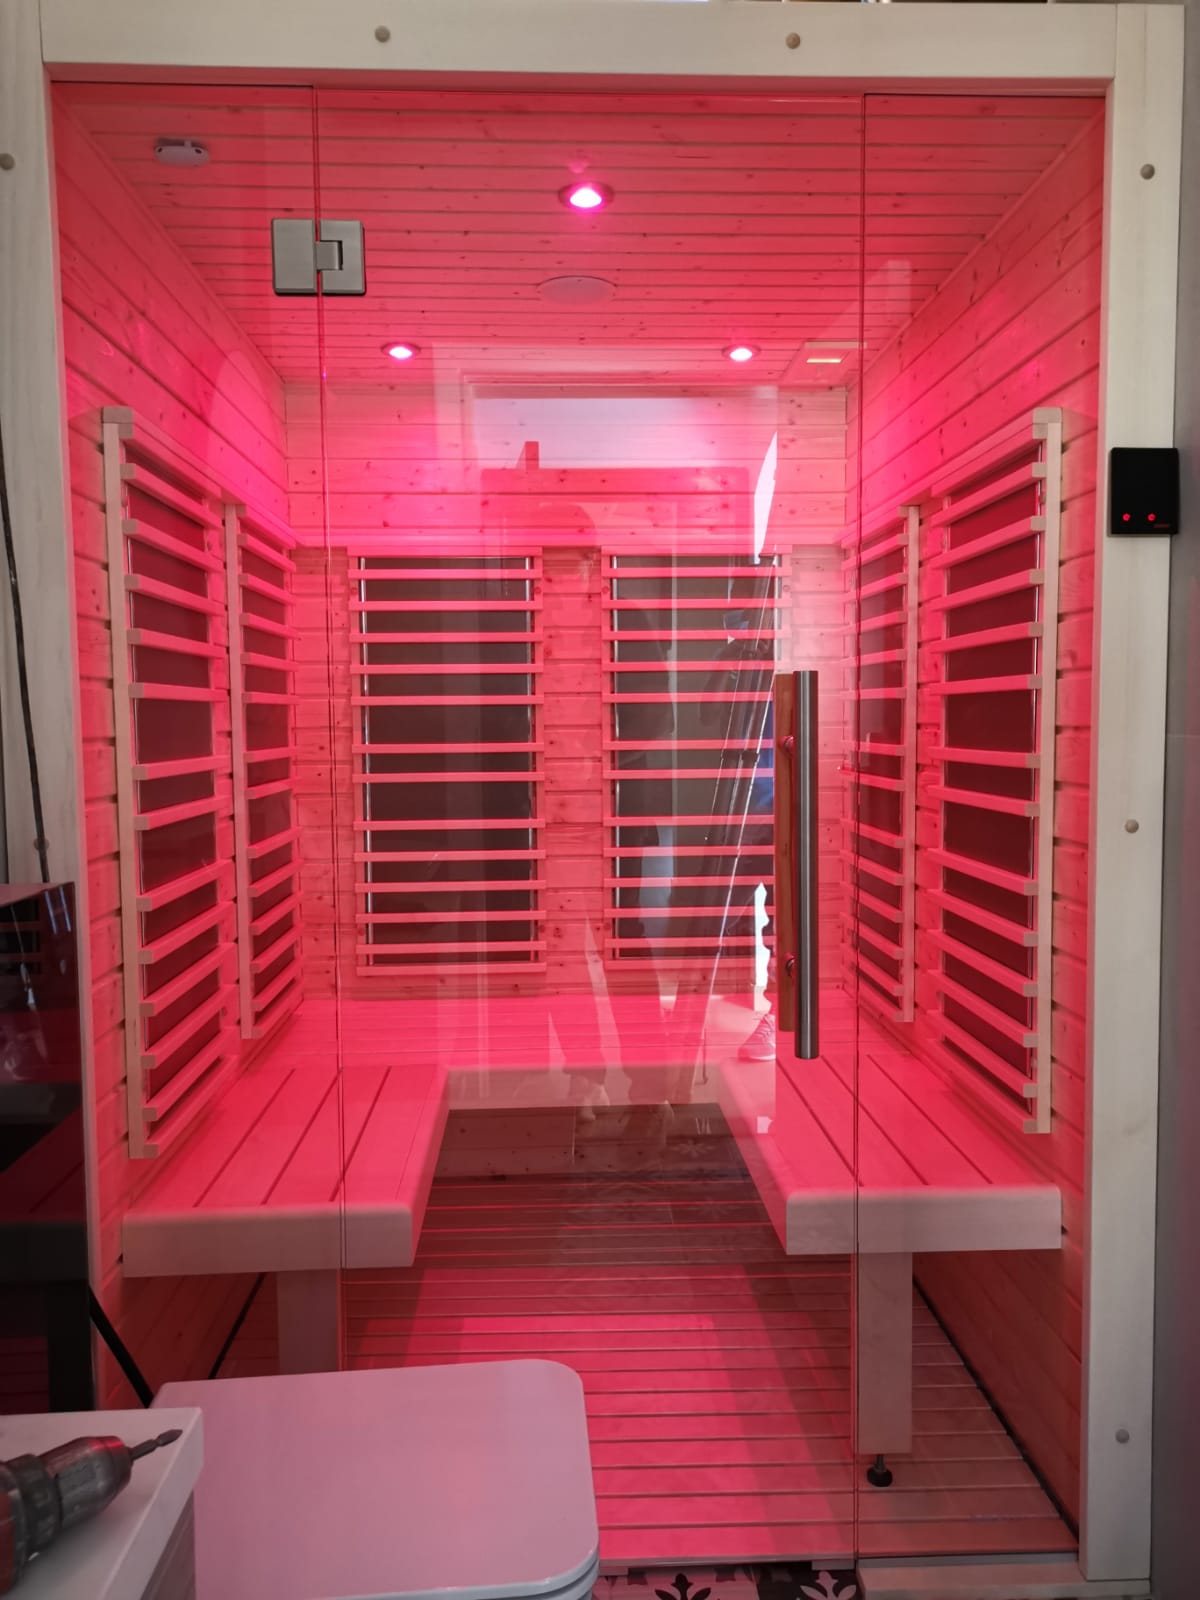 sauna ad infrarossi per bagno